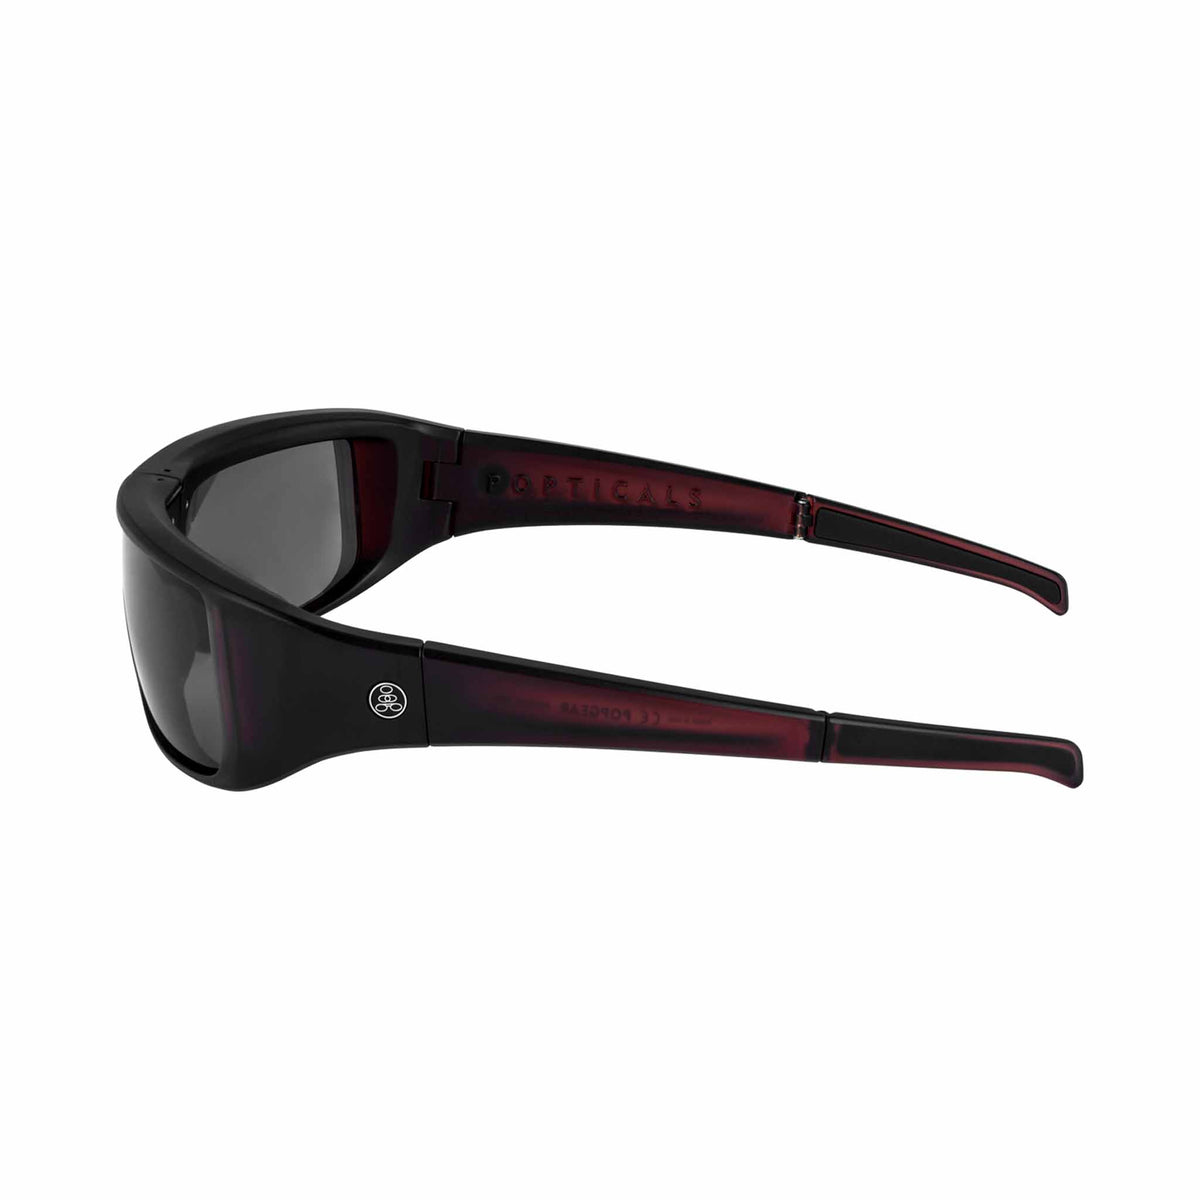 Popticals, Premium Compact Sunglasses, PopGear, 030050-LEGP, Polarized Sunglasses, Gloss Wine/Black Crystal Frame, Gray Lenses, Side View